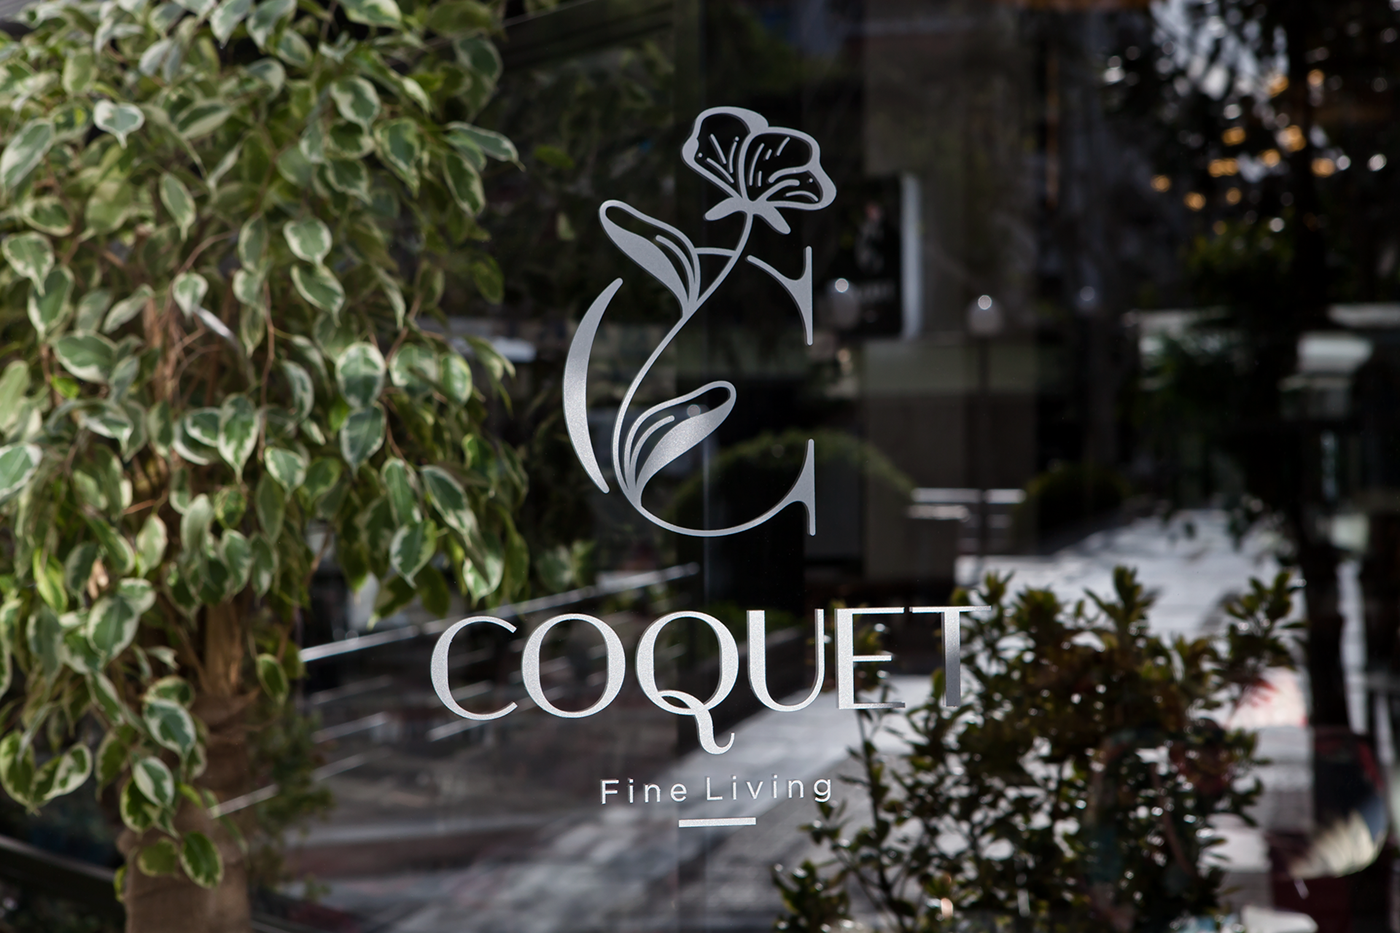 Coffee logo identity Packaging bar cursordesign visual cafe Coquet branding 